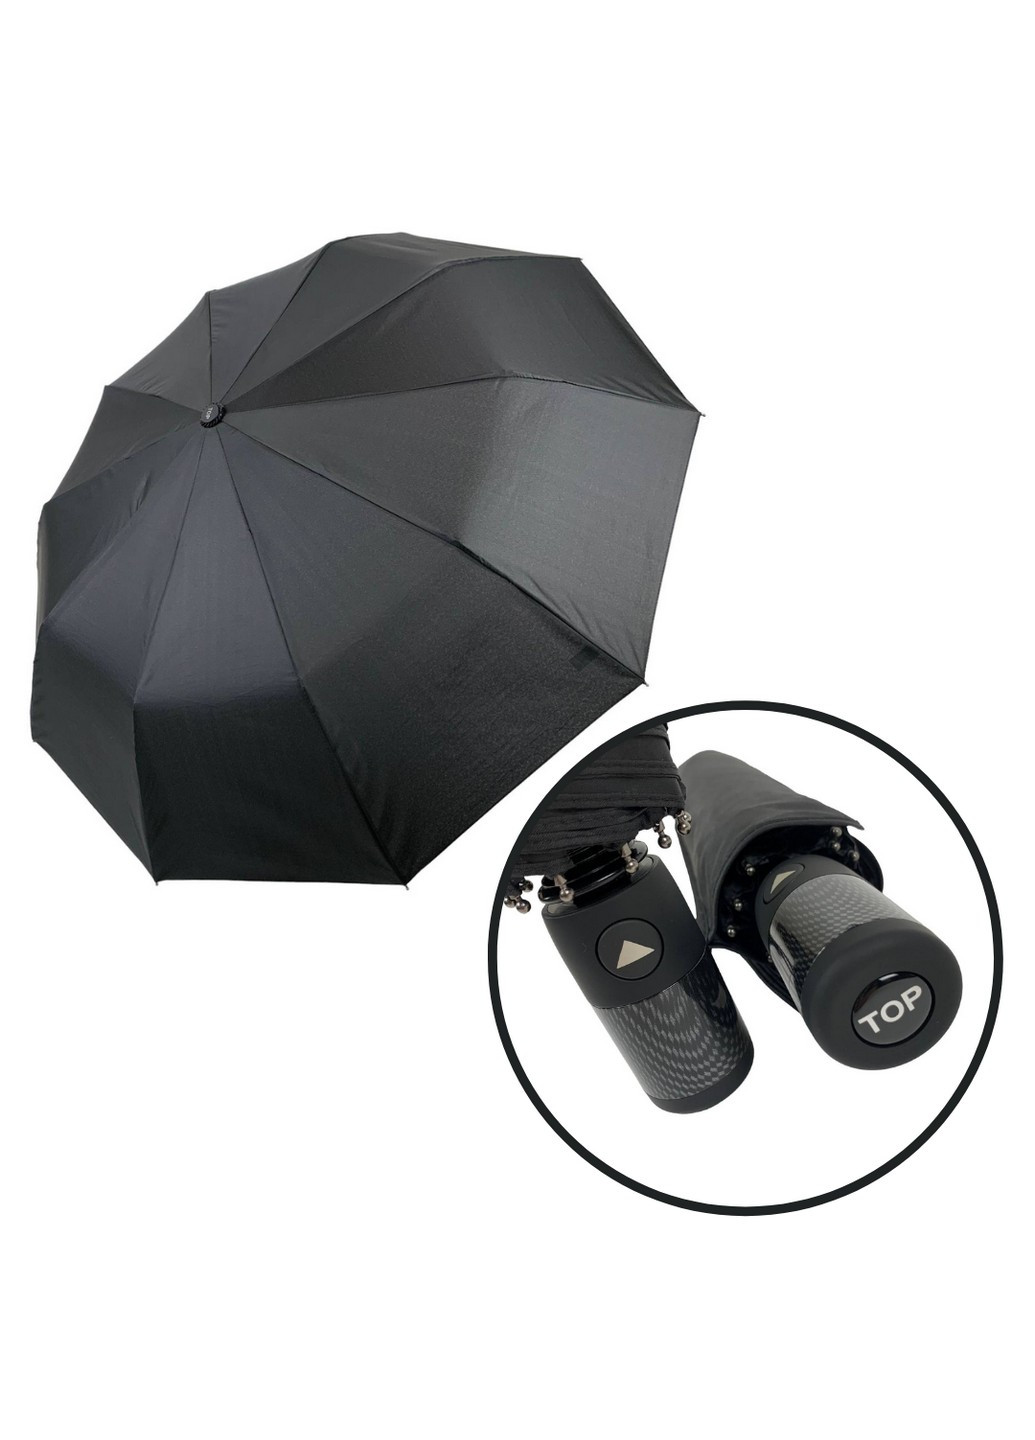 Мужской зонт полуавтомат 98 см Toprain (258638227)